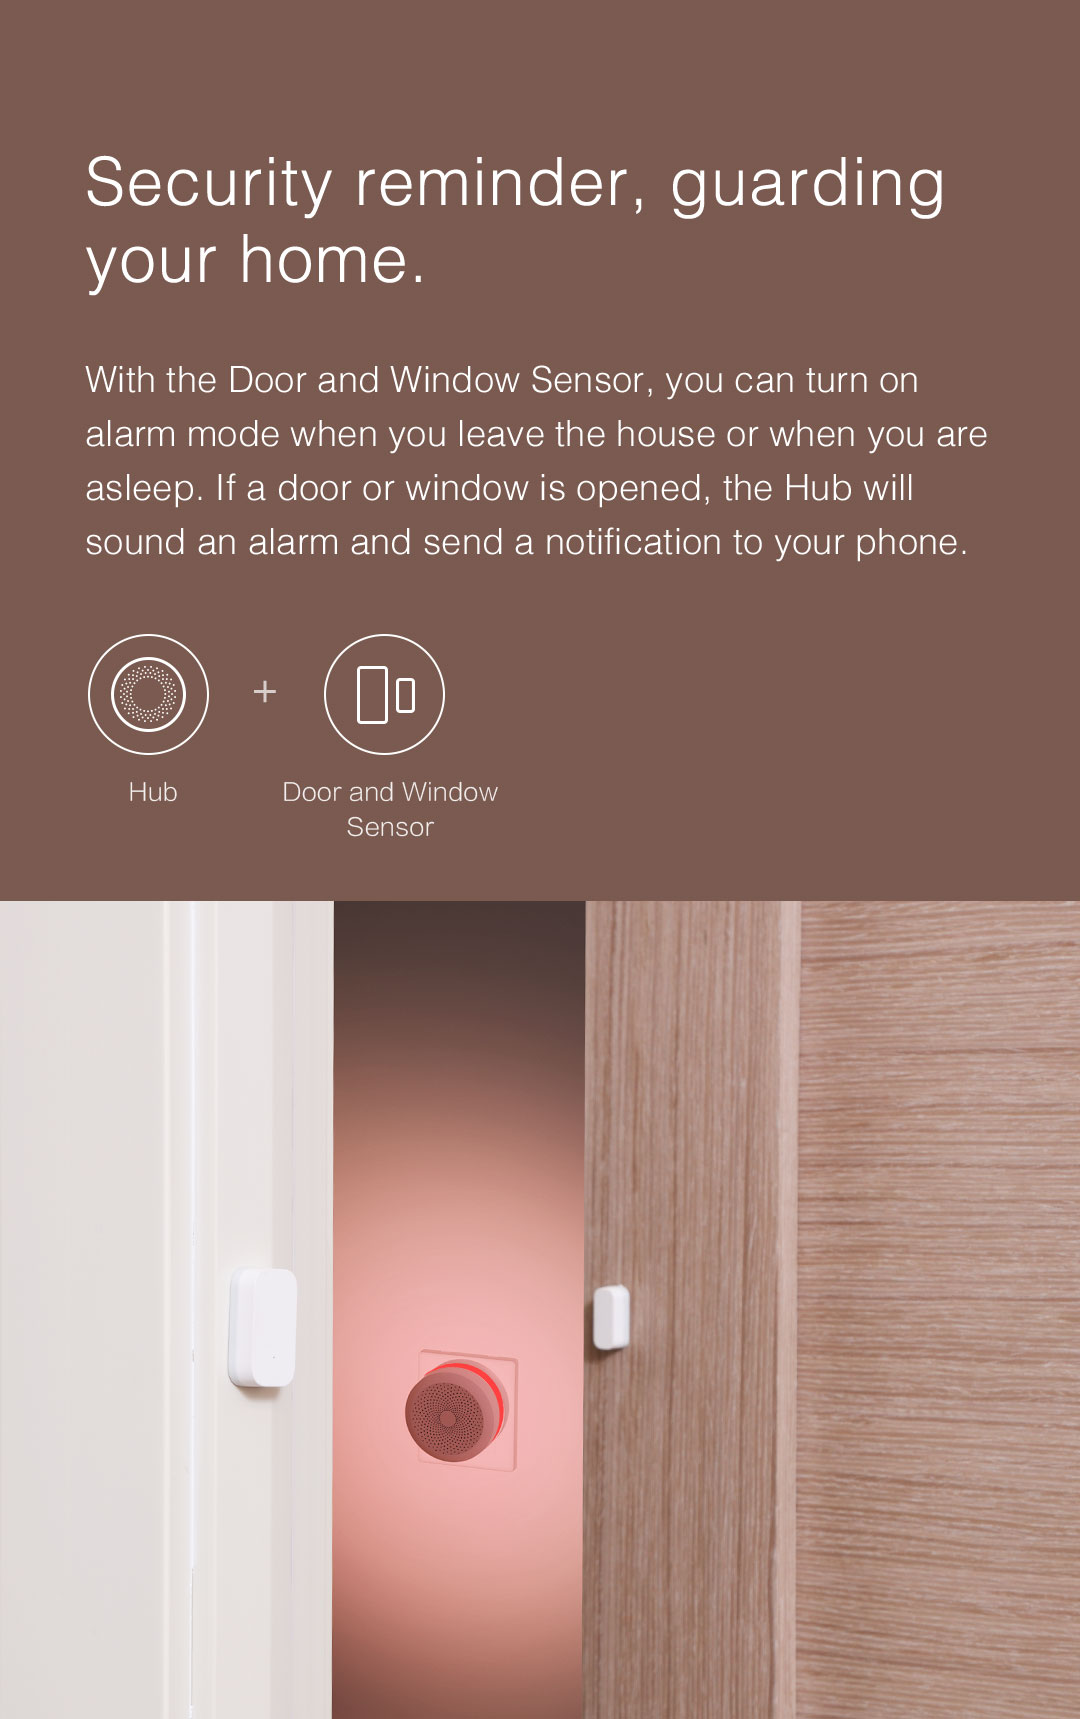 Home Security with Aqara Door Window Sensor and smart hub.